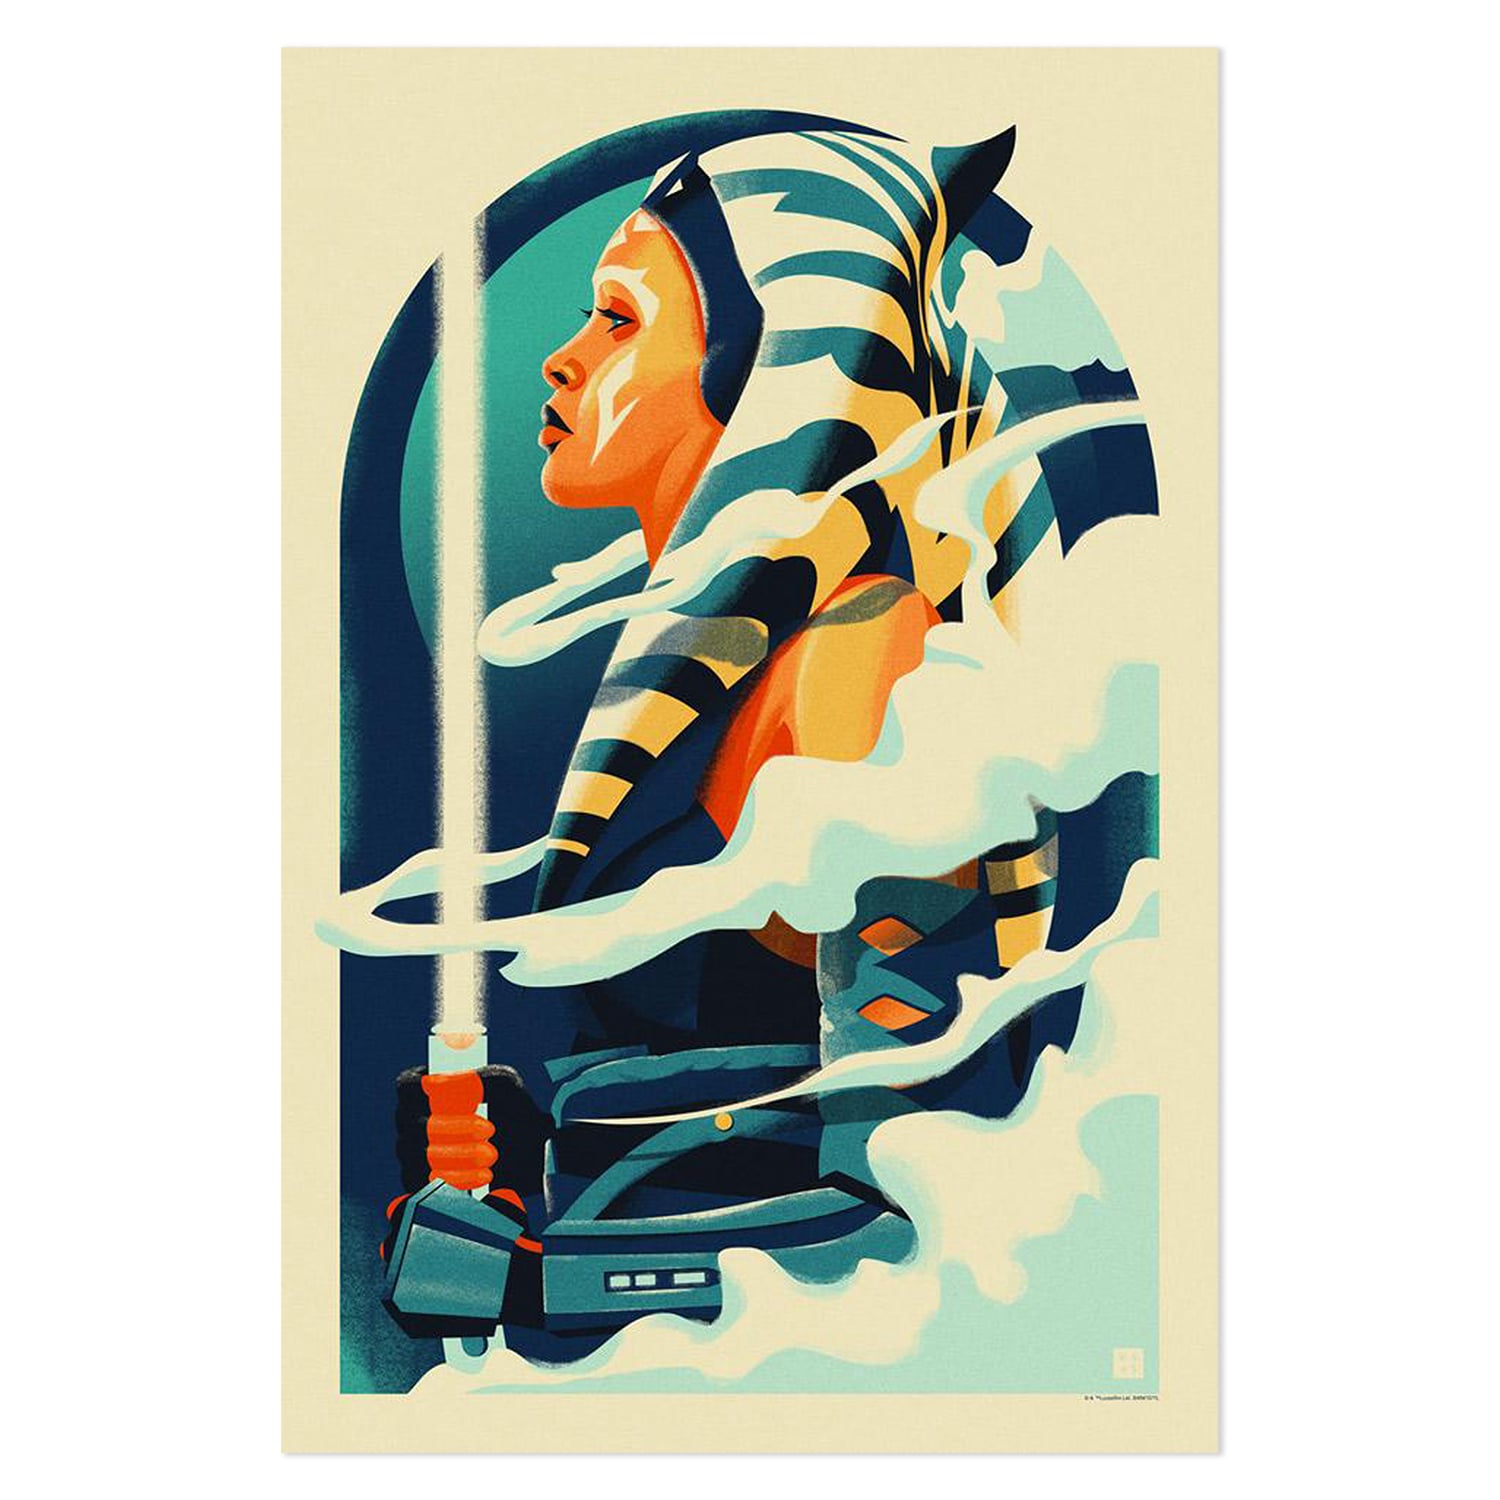 The Jedi by Danny Haas - The Mandalorian Poster | Ahsoka | PopCultArt